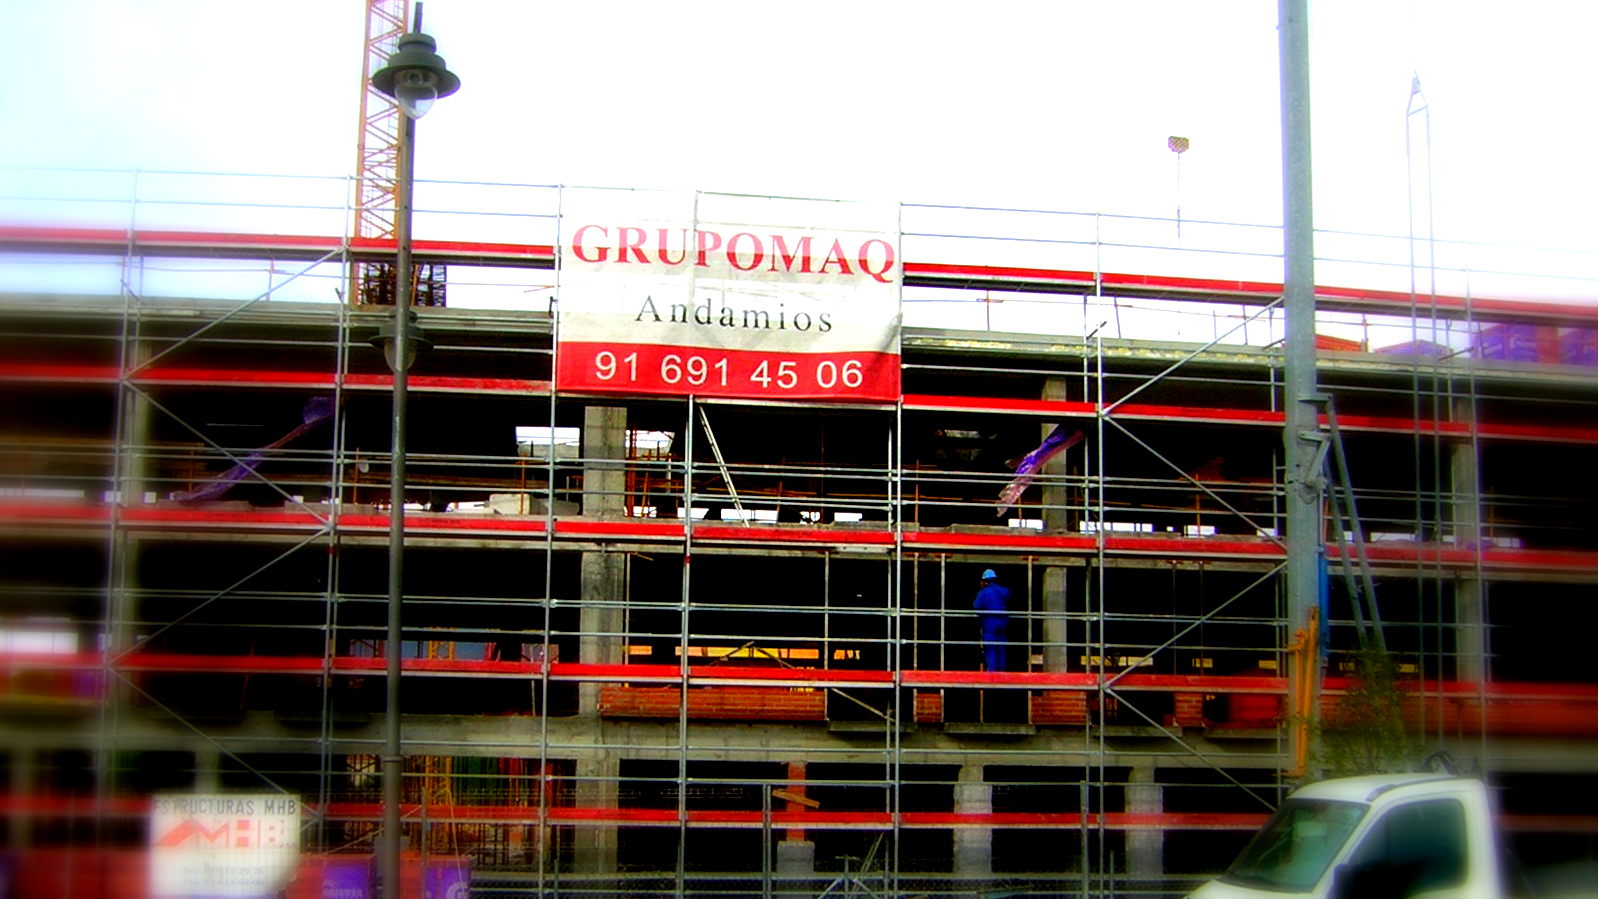 construccion-guadarrama-nor48-proandamio-grupomaq-portada